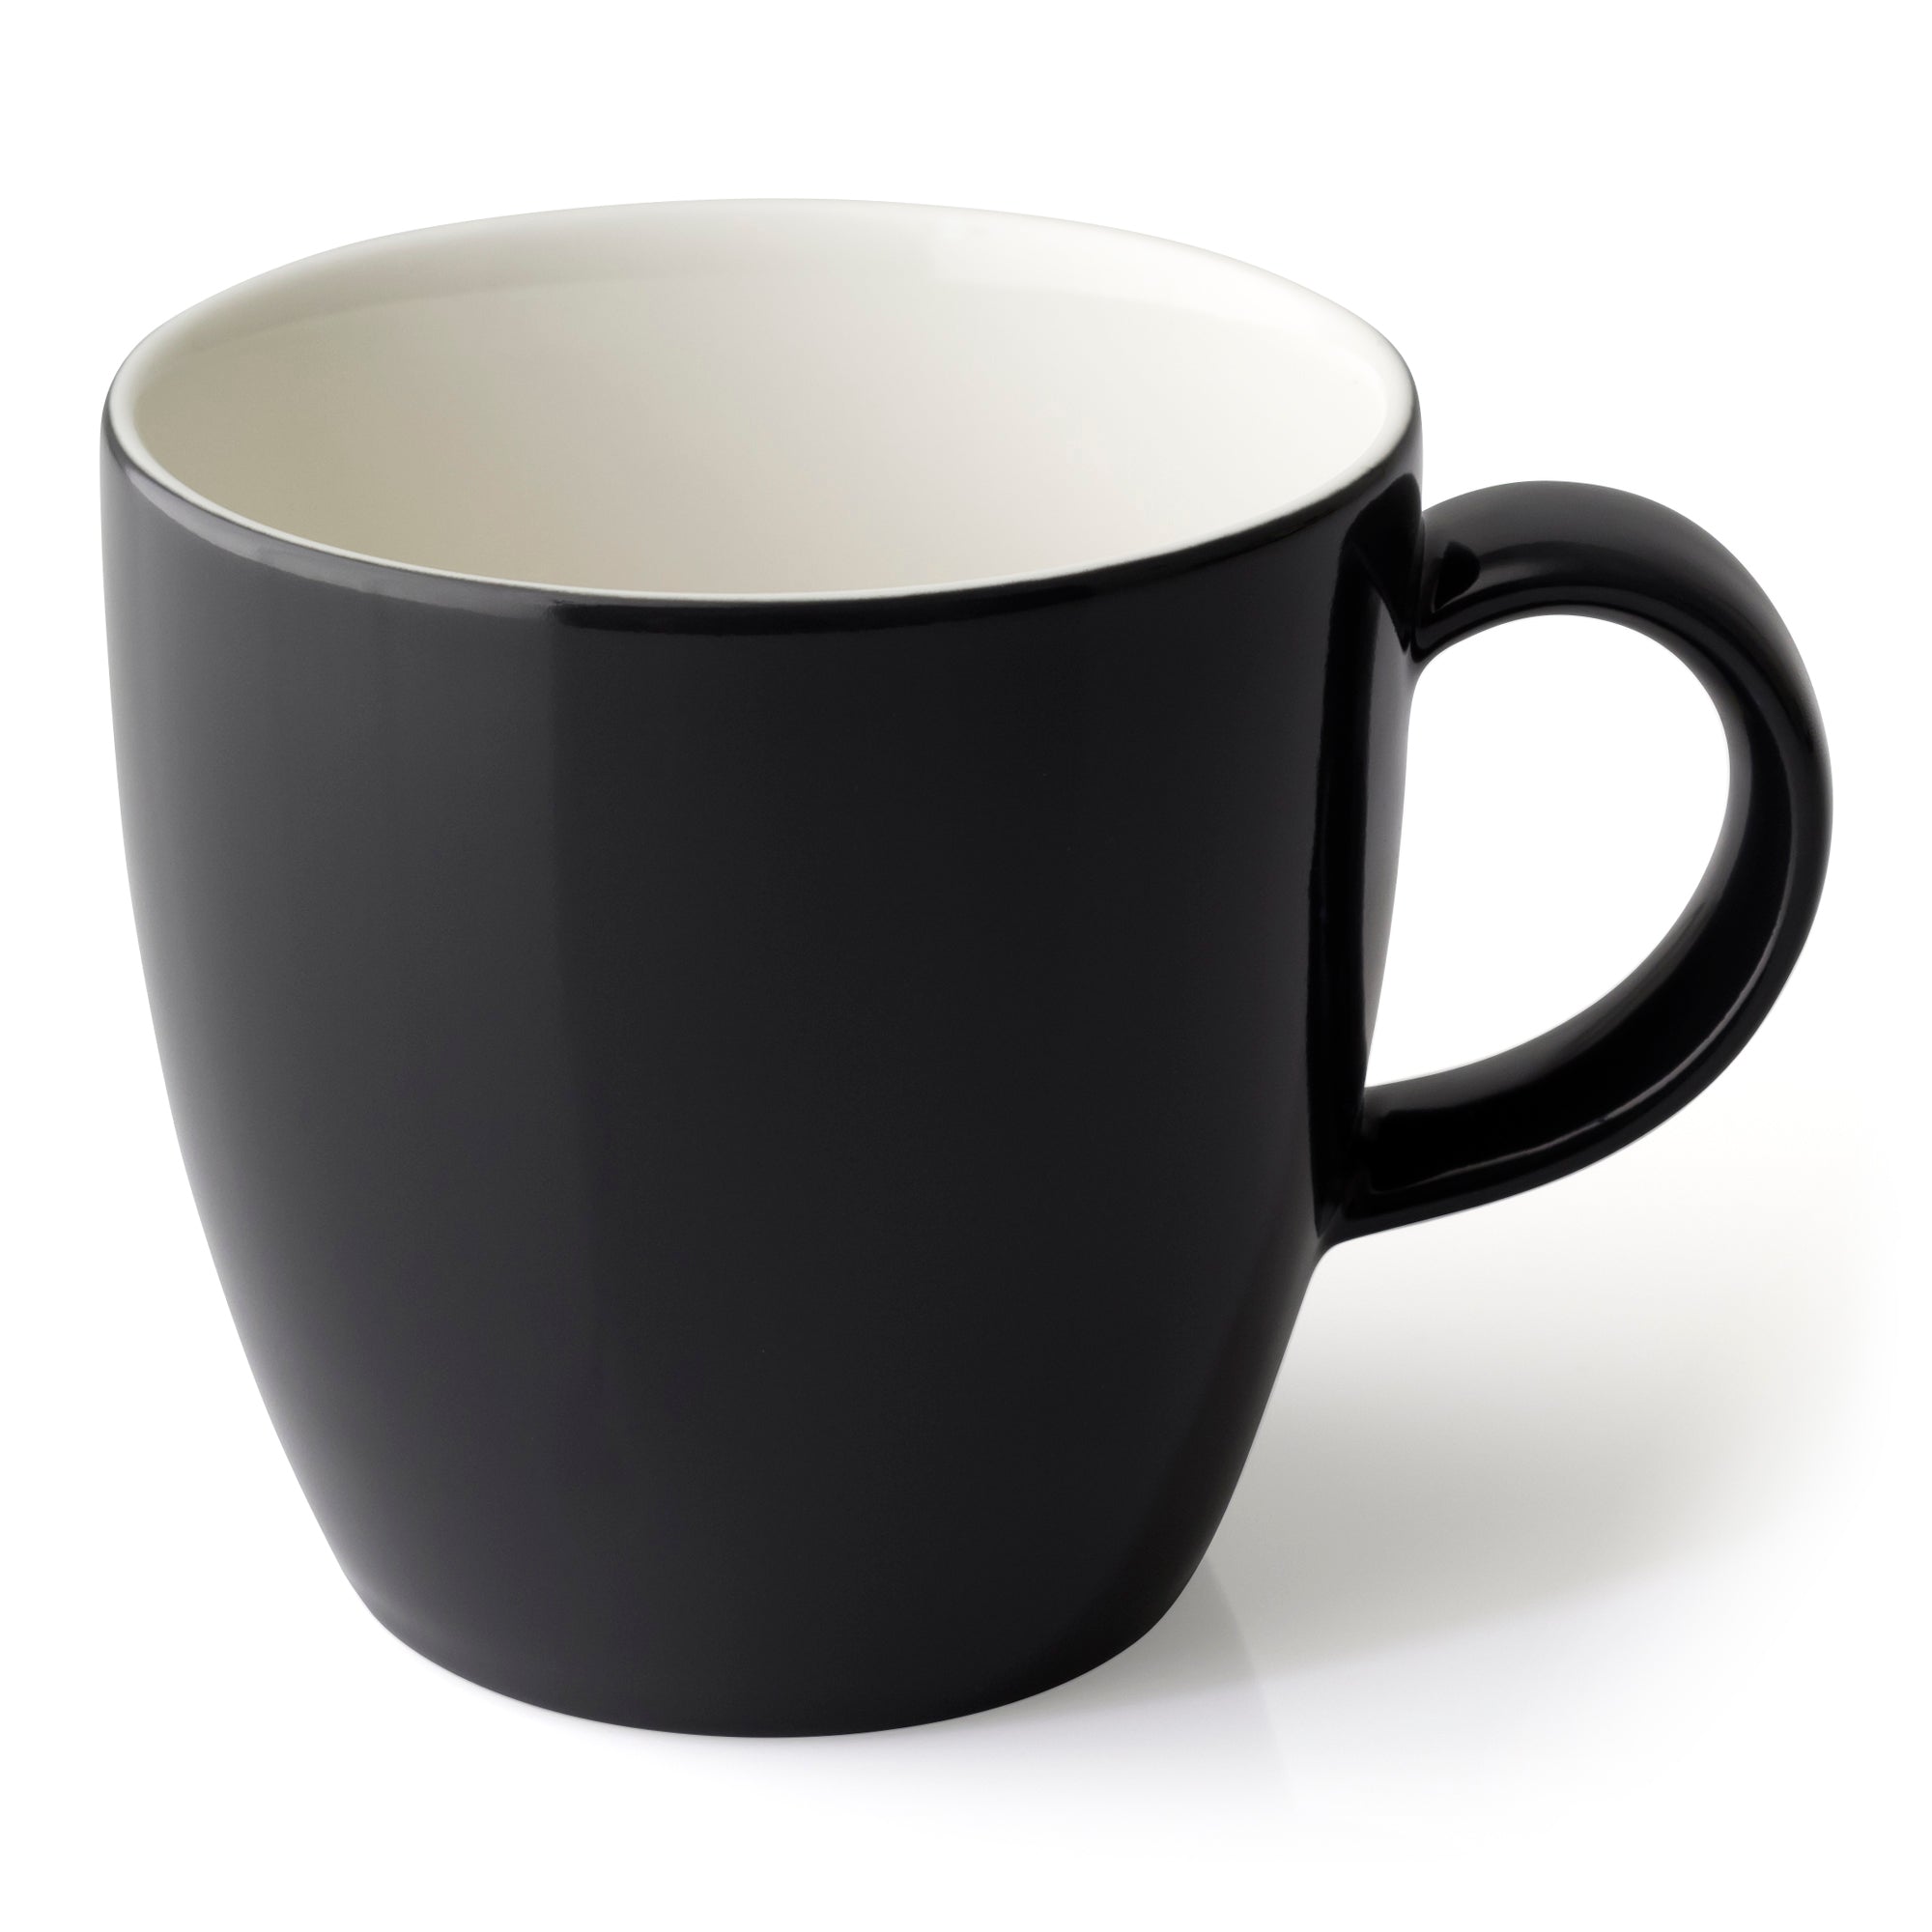 FORLIFE Design, Teaware, coffeeware for your everyday. – FORLIFE Design